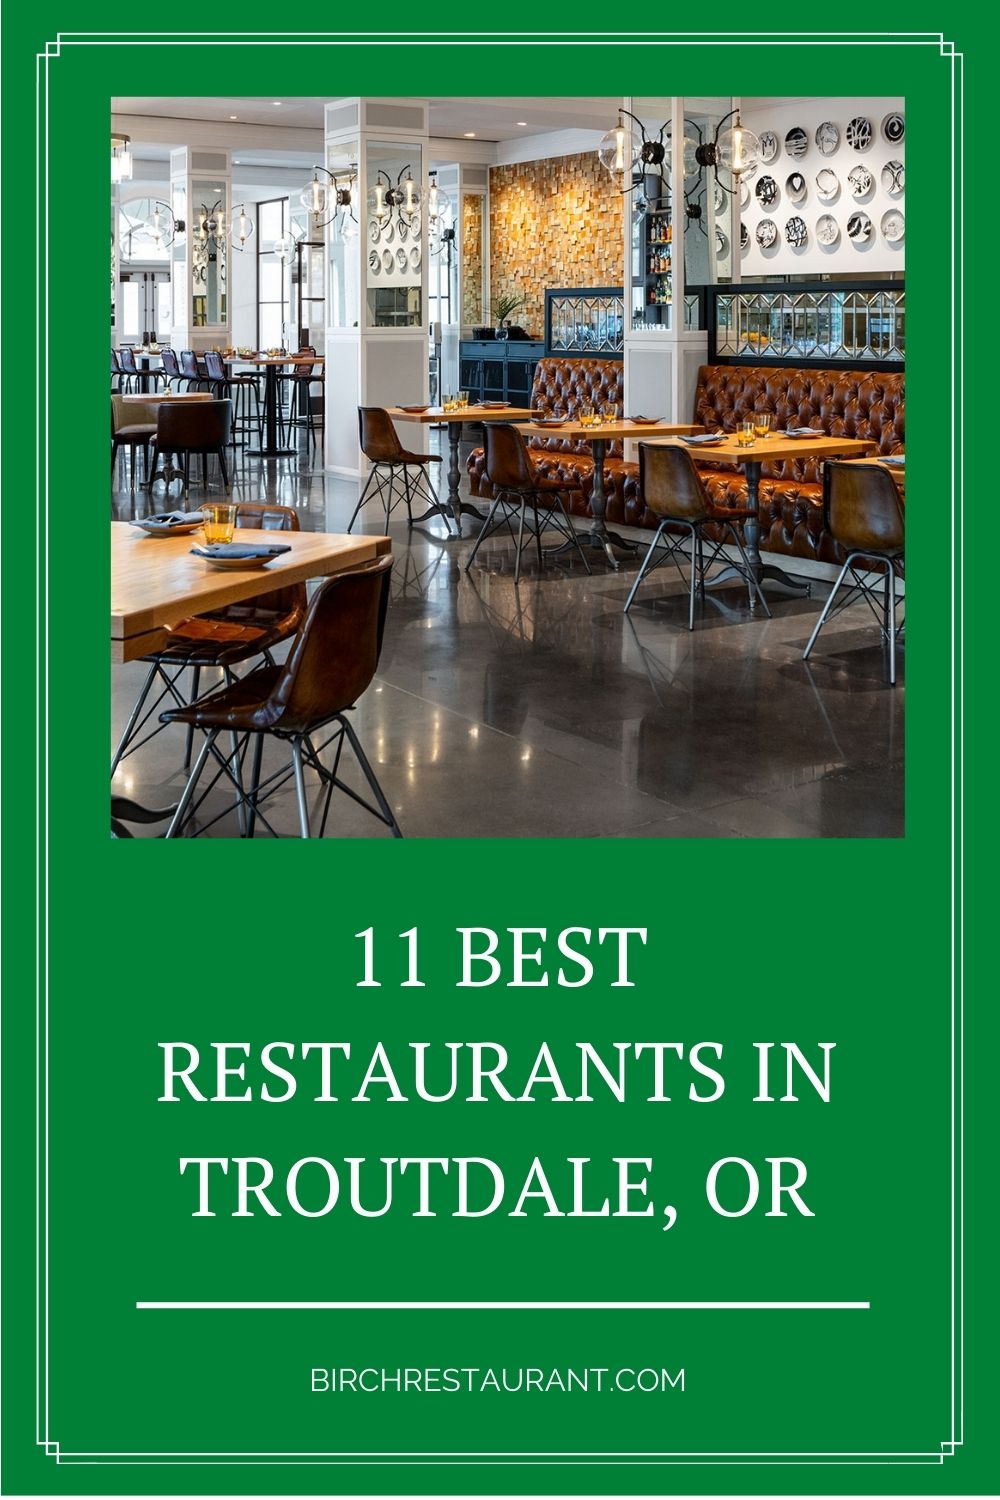 Best Restaurants in Troutdale